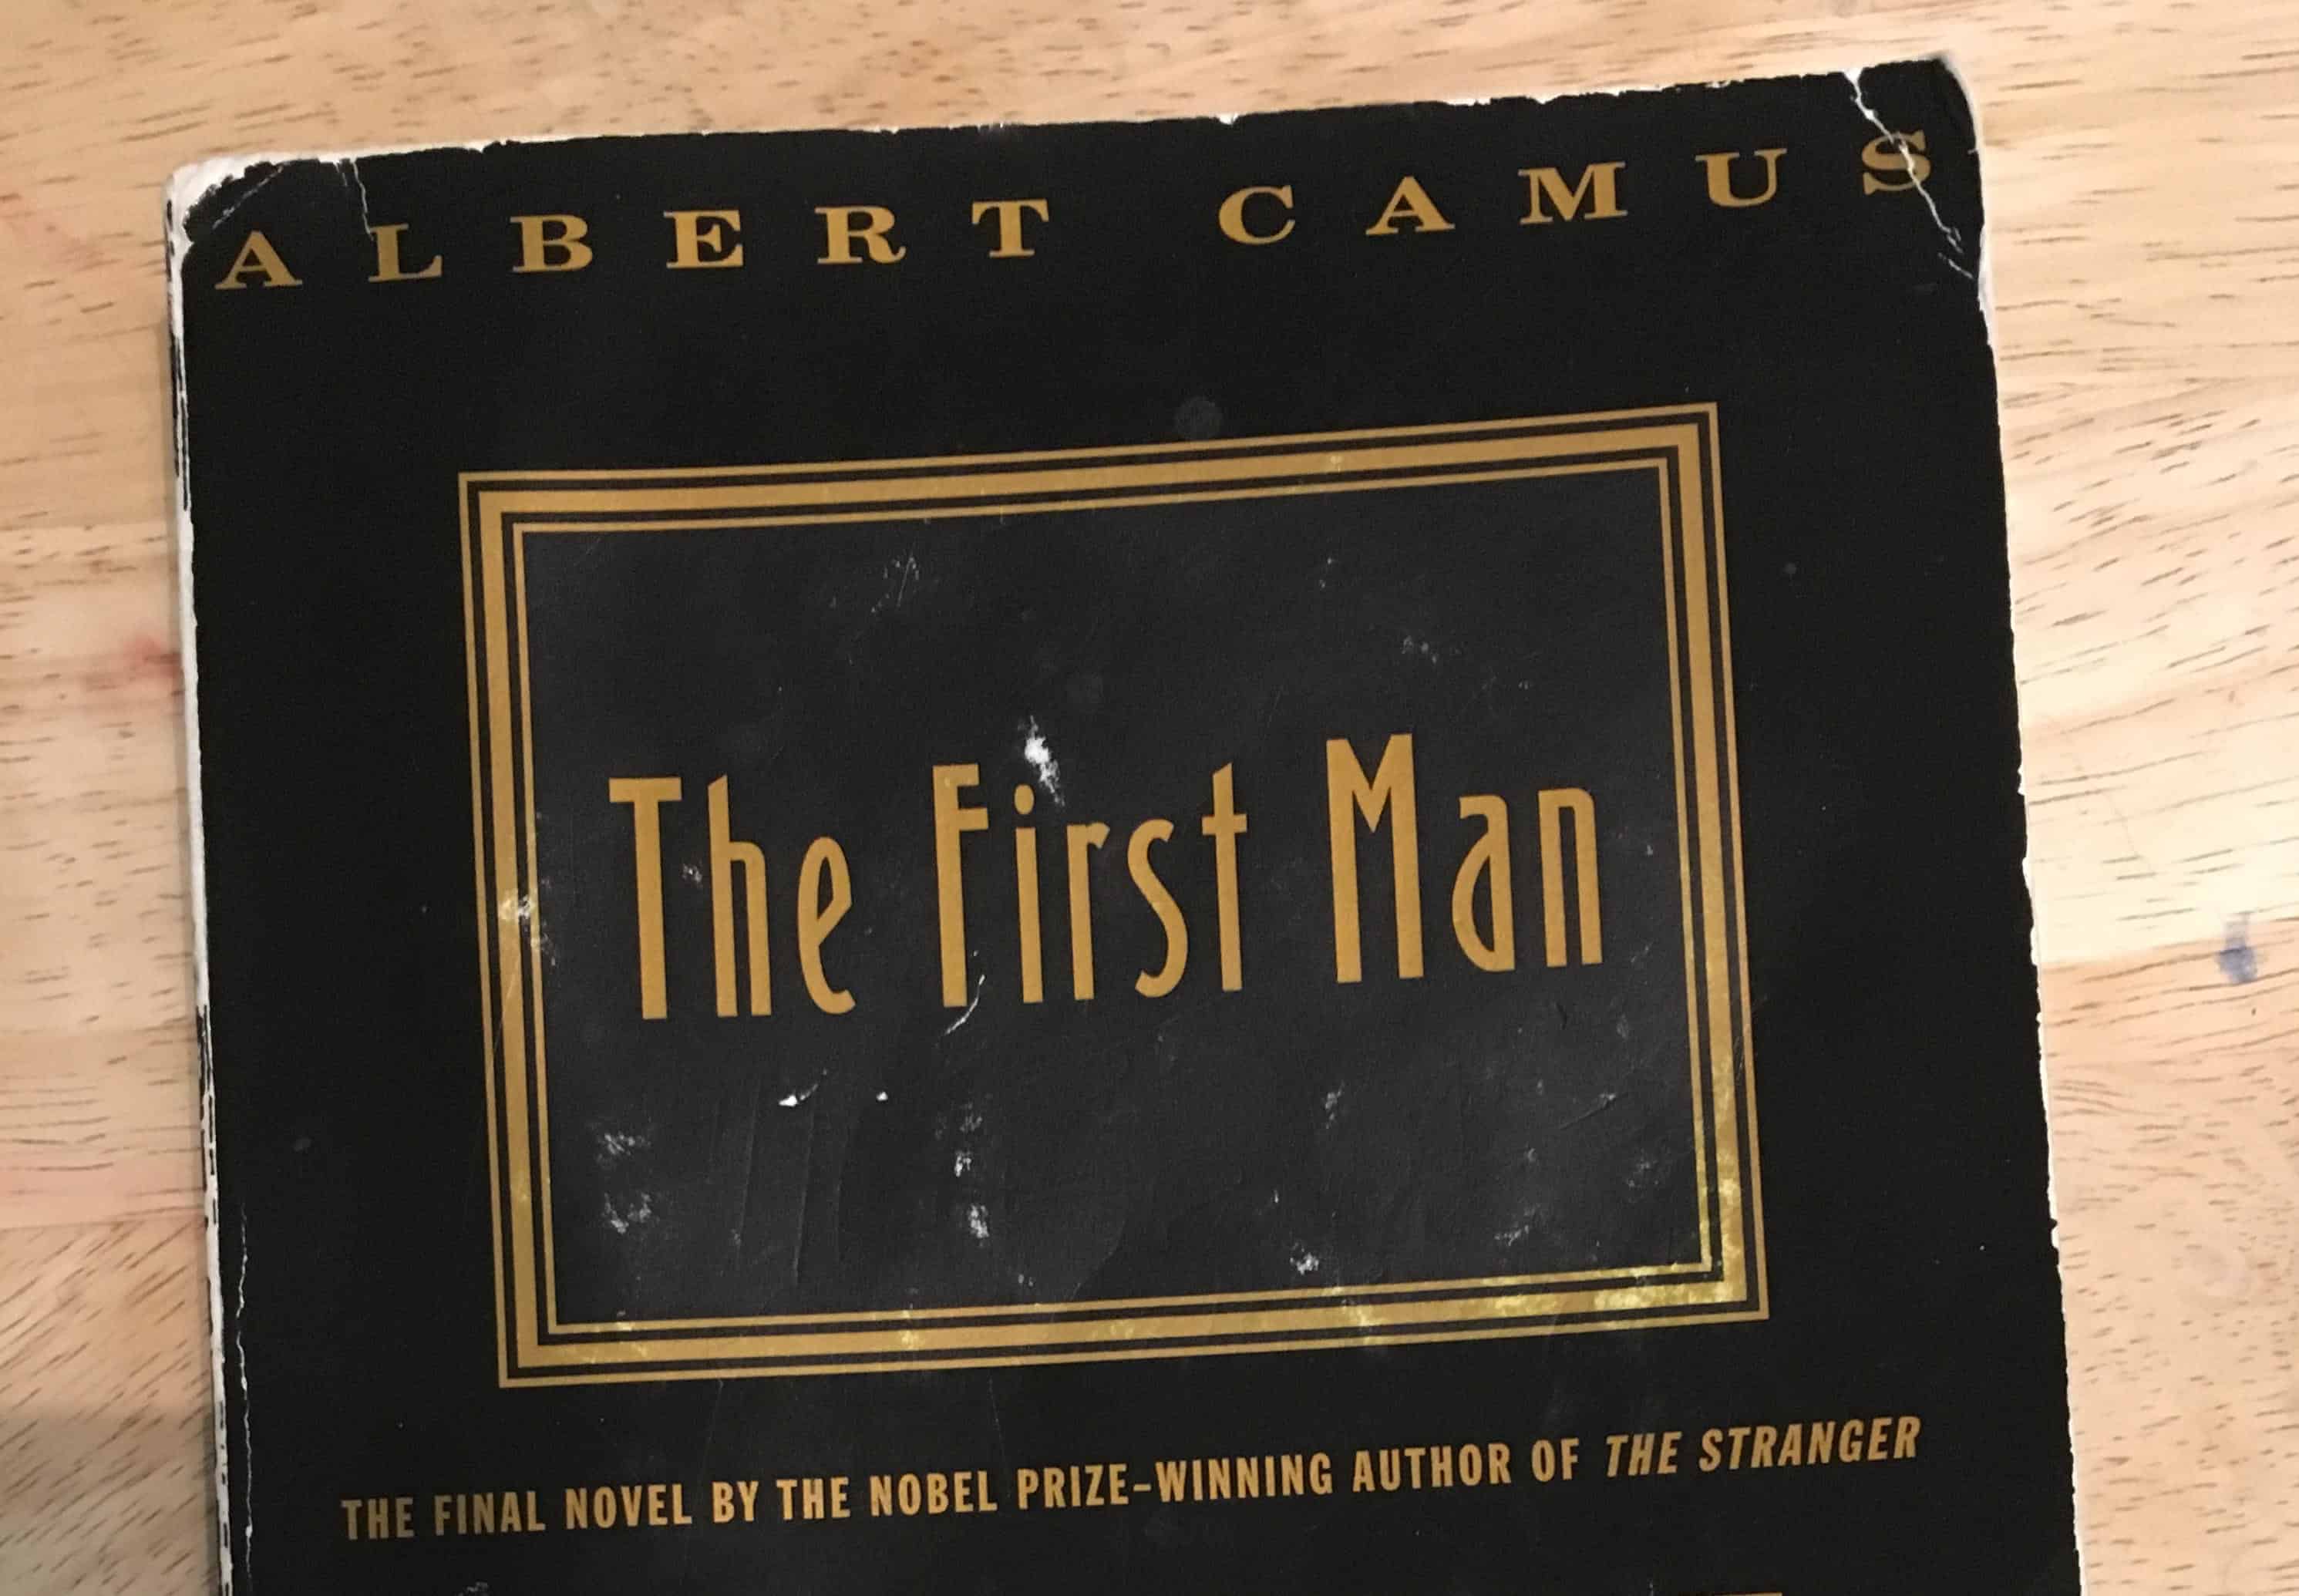 Durham teacher on 'The First Man' by Albert Camus - EducationNC